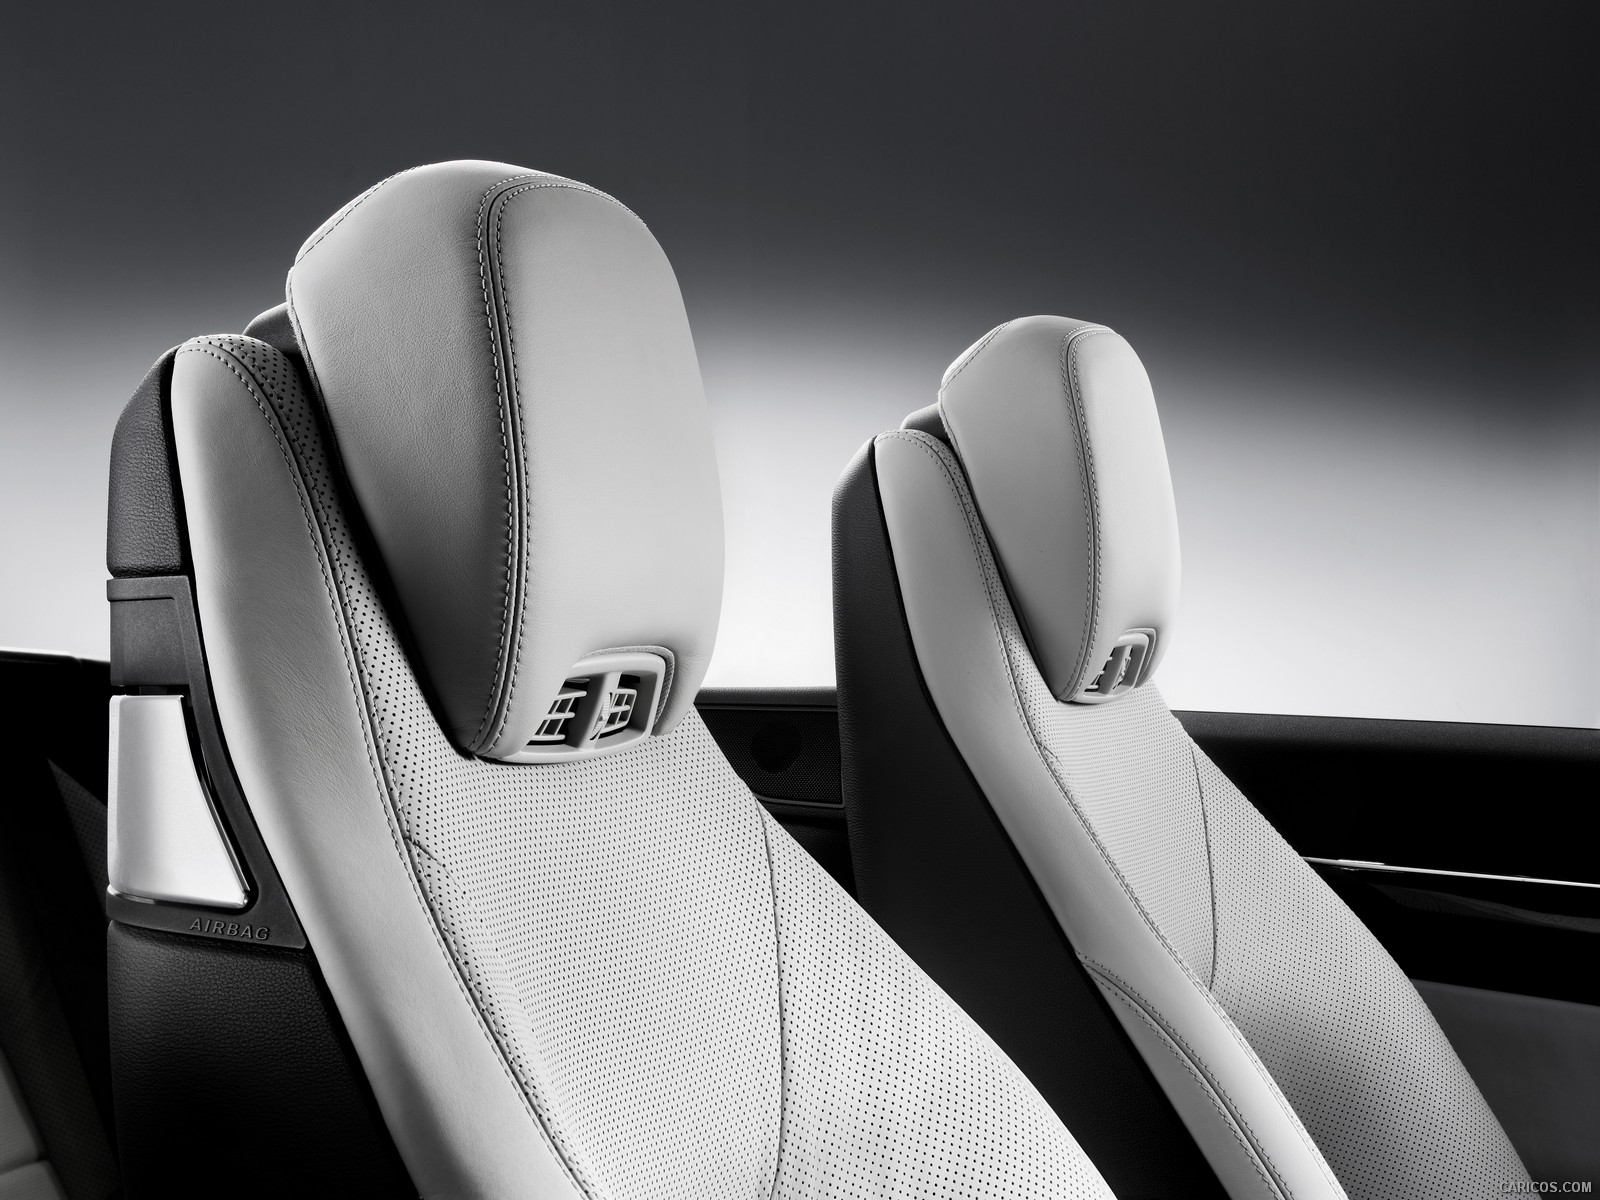 Mercedes-Benz E-Class Cabriolet  - Interior, Front Seats, #56 of 165